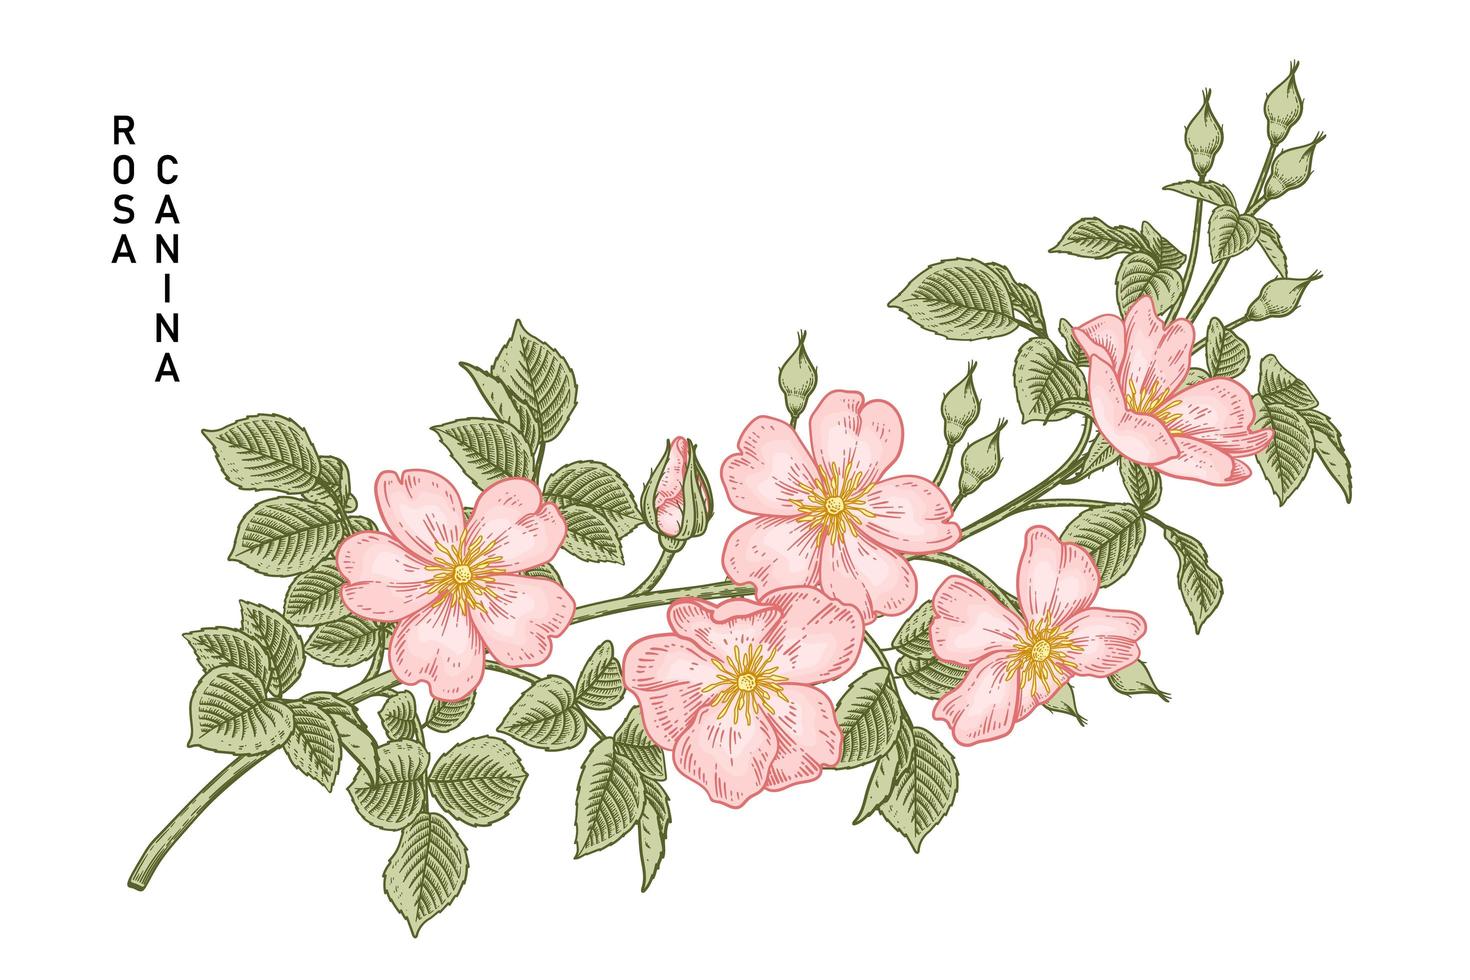 rama de perro rosa rosa o rosa canina con flores y hojas ilustración botánica dibujada a mano vector